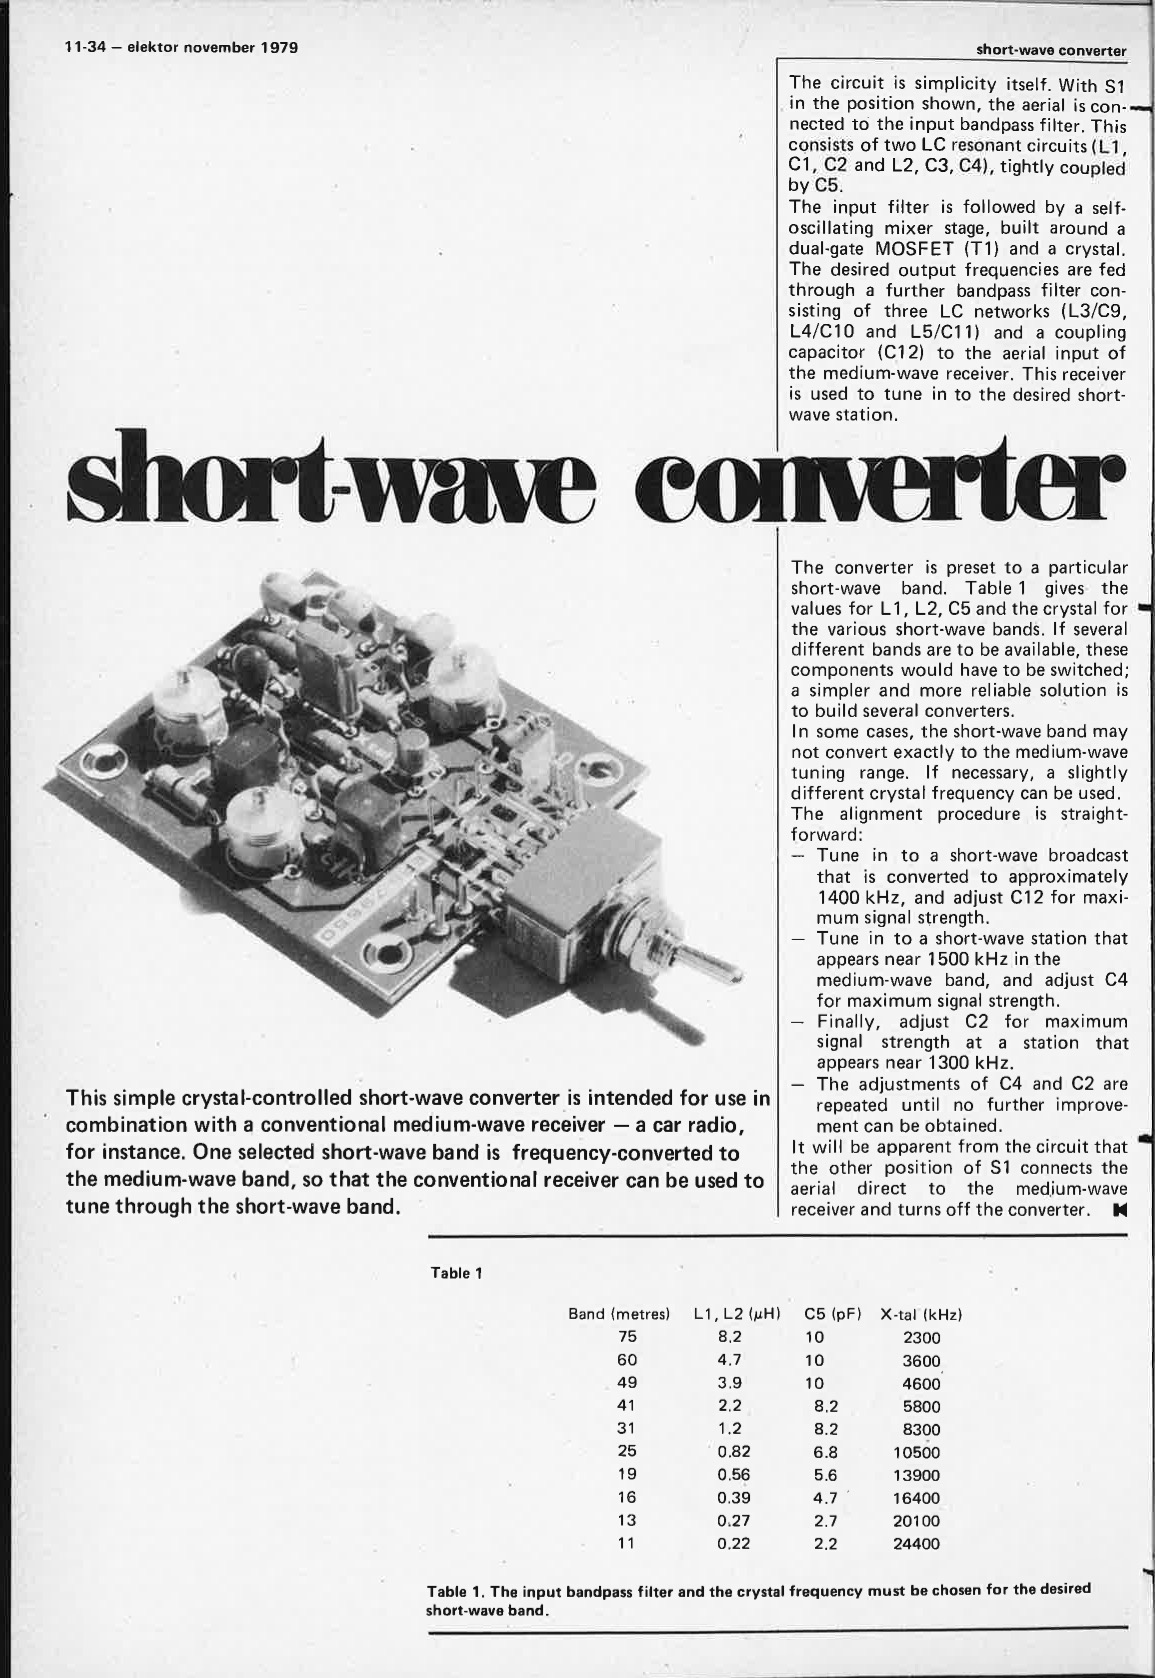 shortwave converter